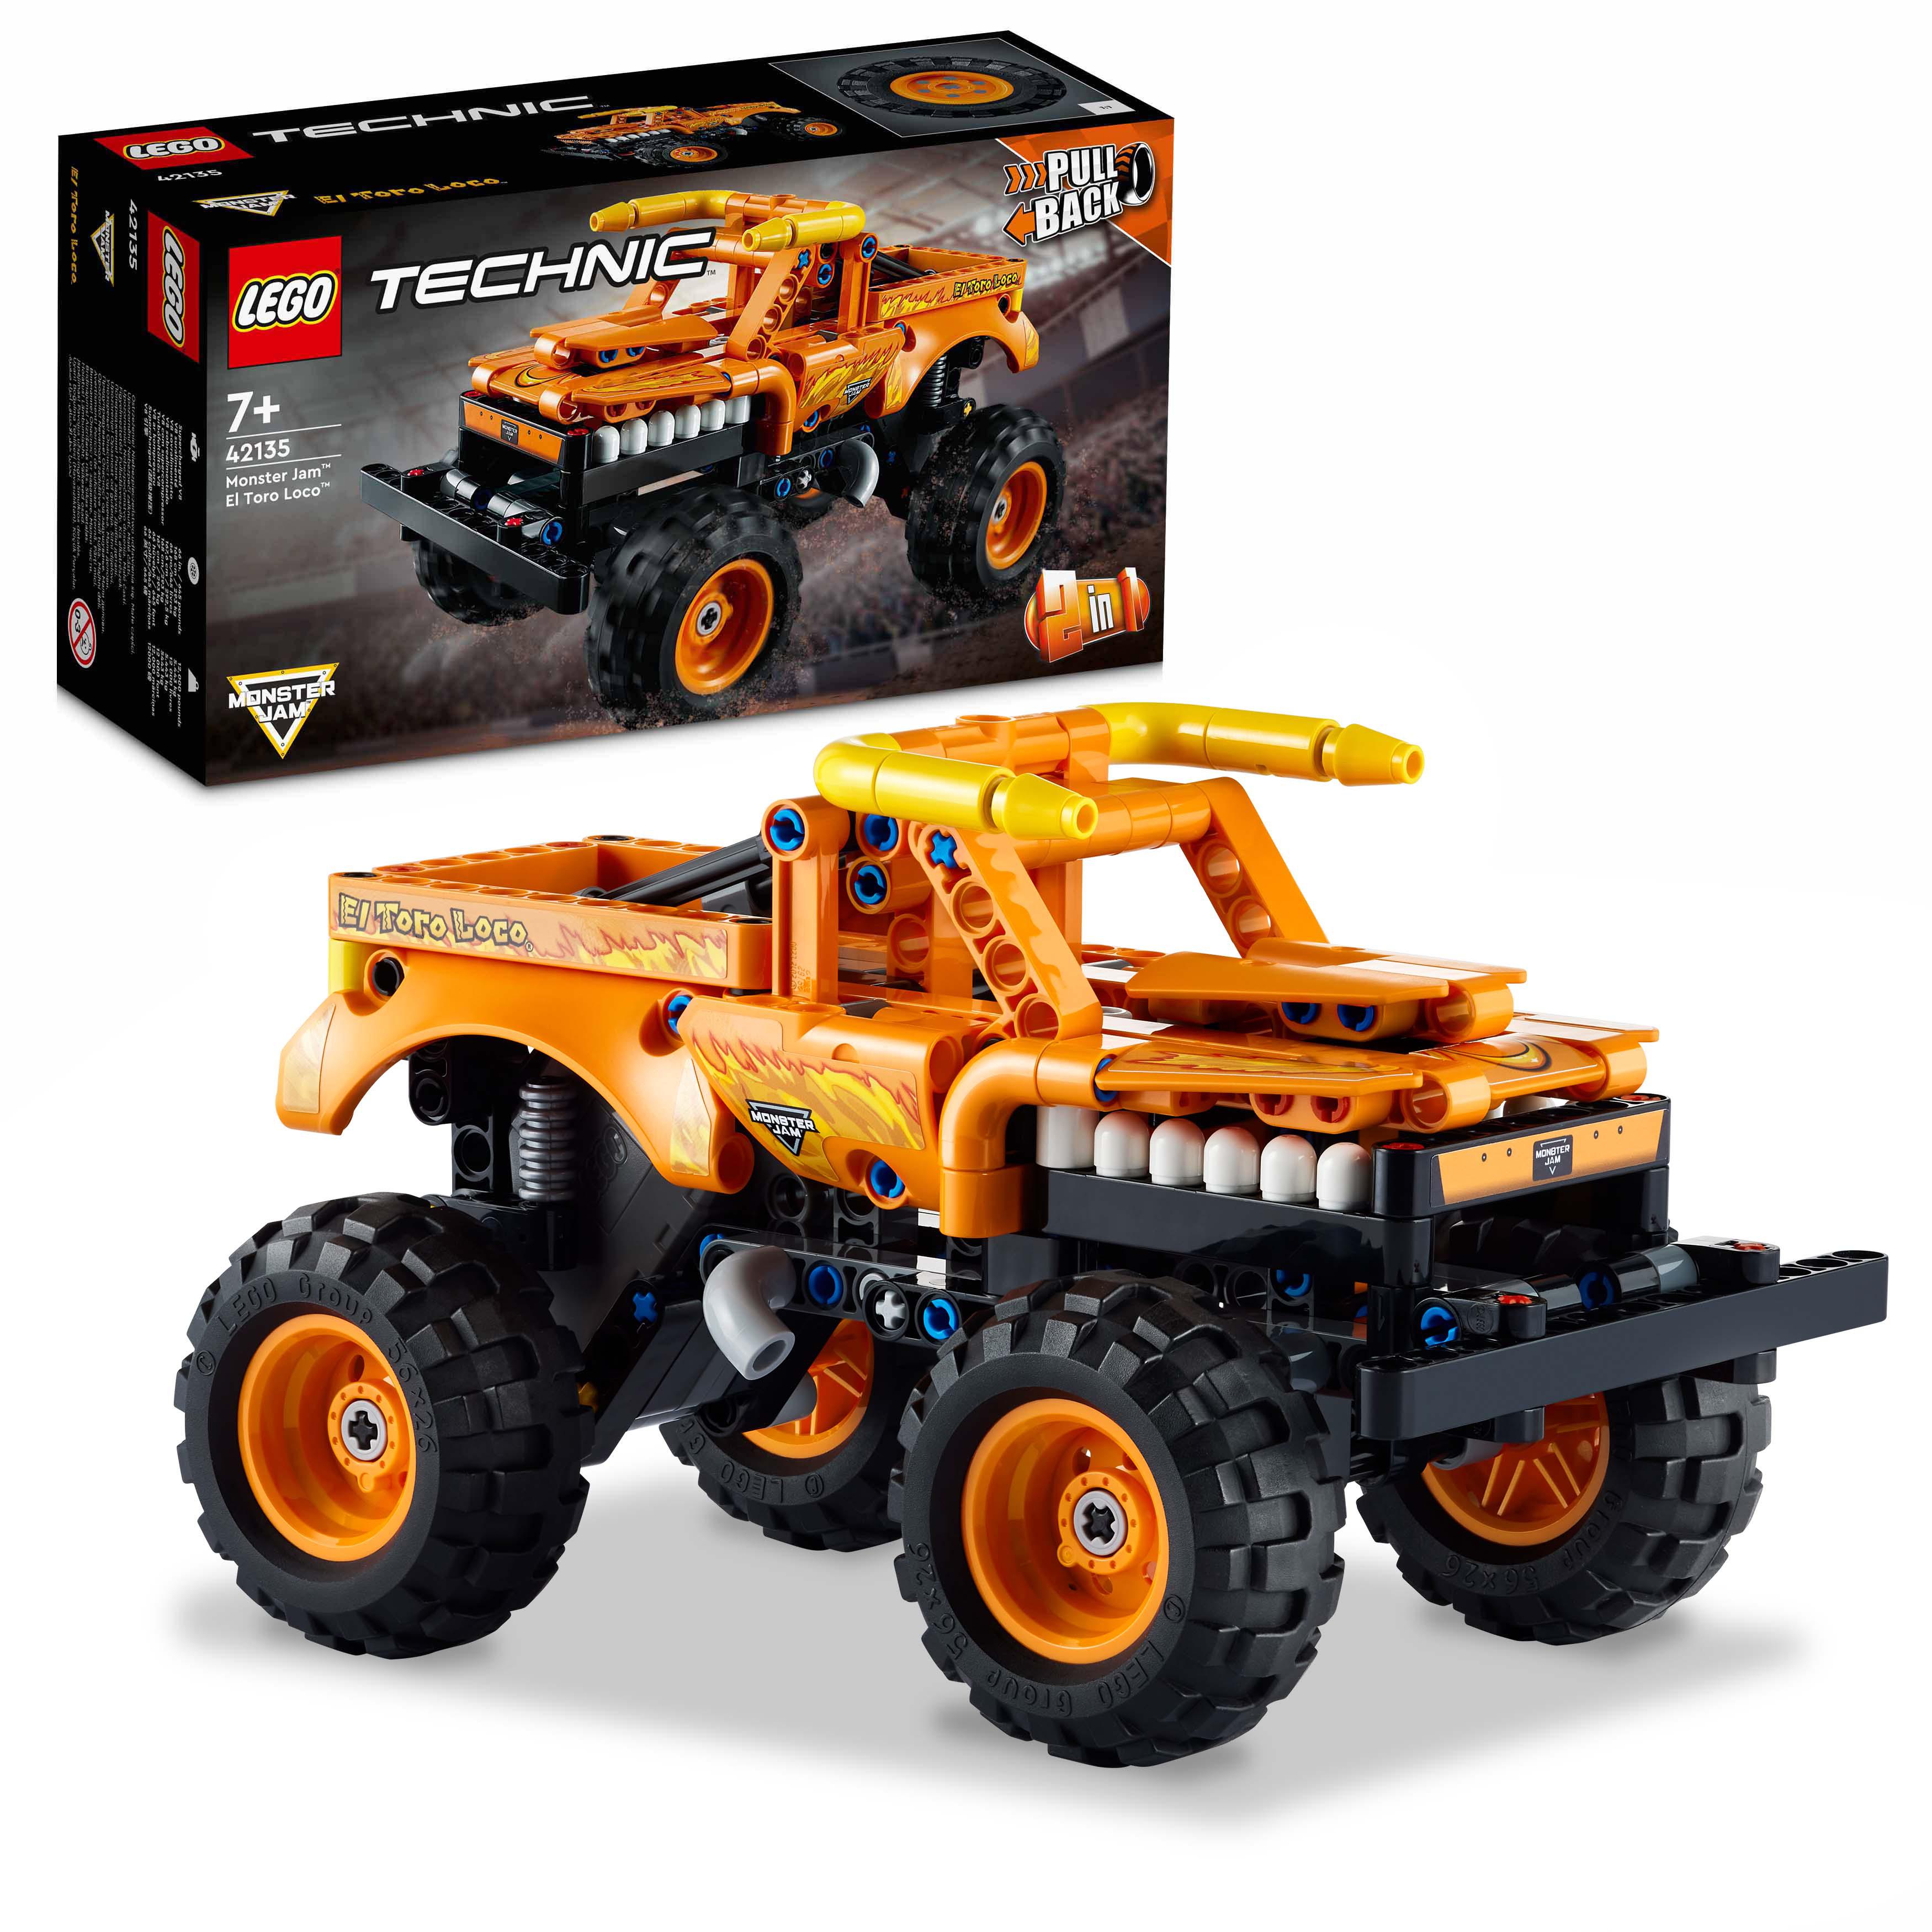 LEGO Technic Monster Jam El Toro Loco, Set 2 in 1 Camion e Macchina Giocattolo, 42135, , large